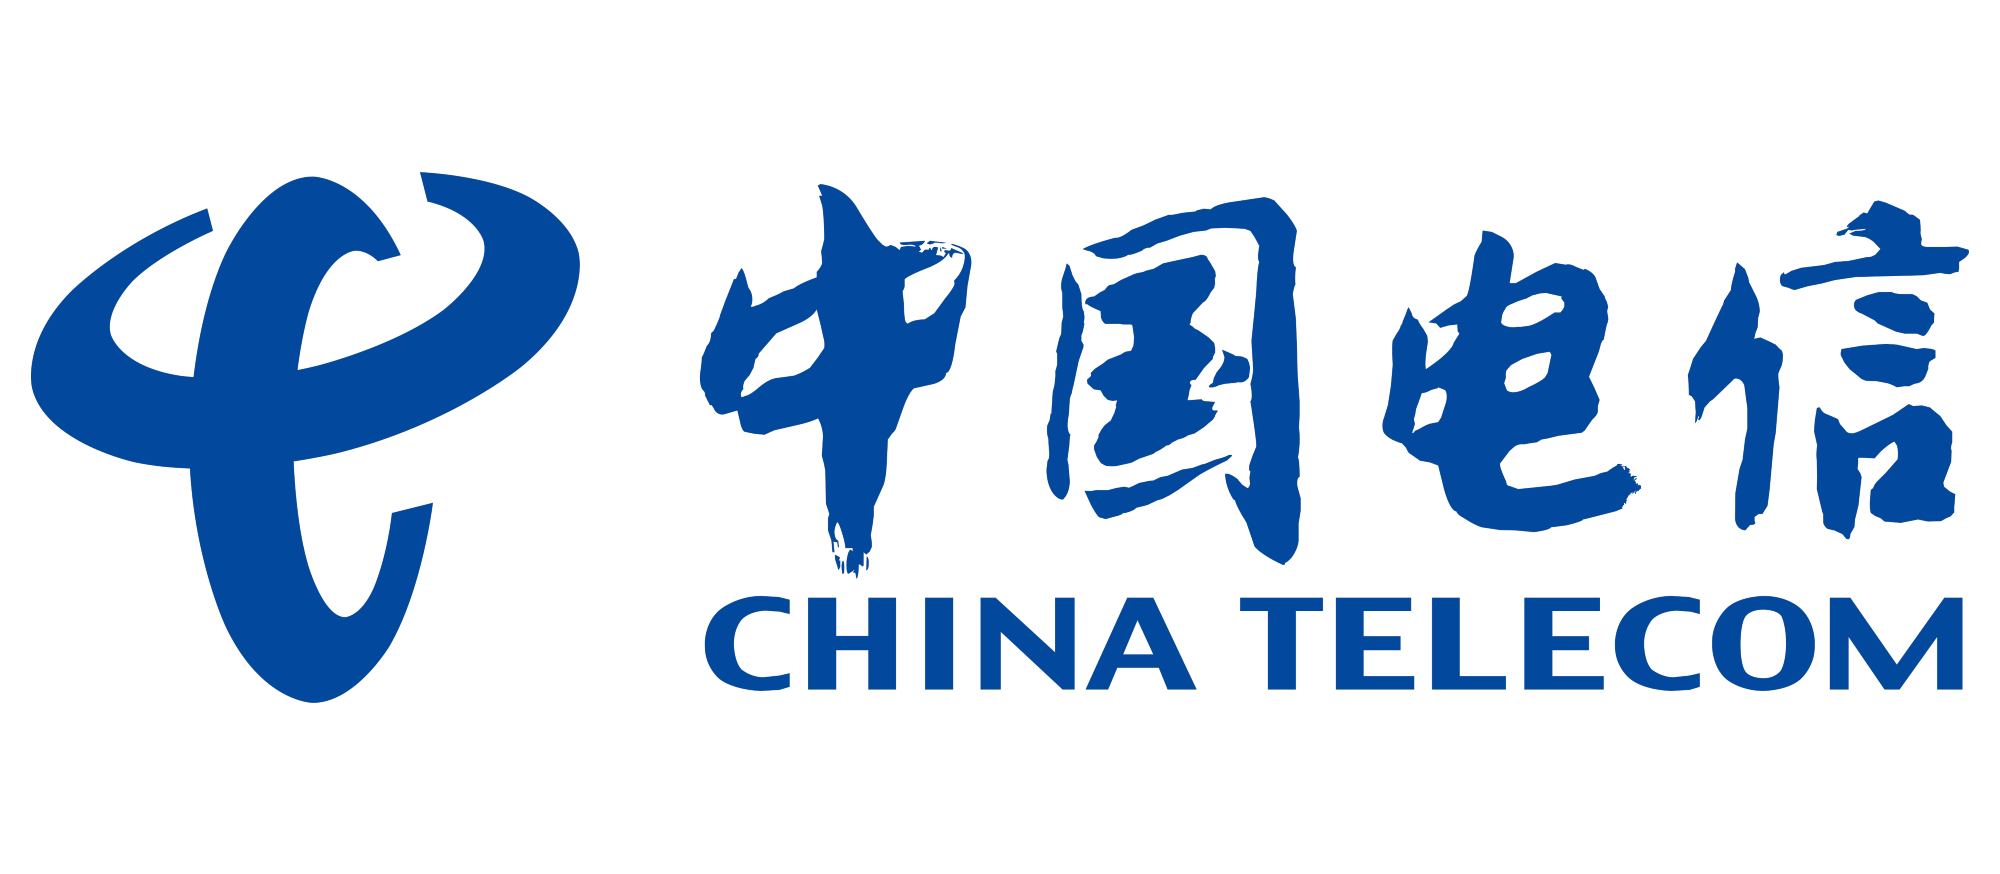 China_Telecom